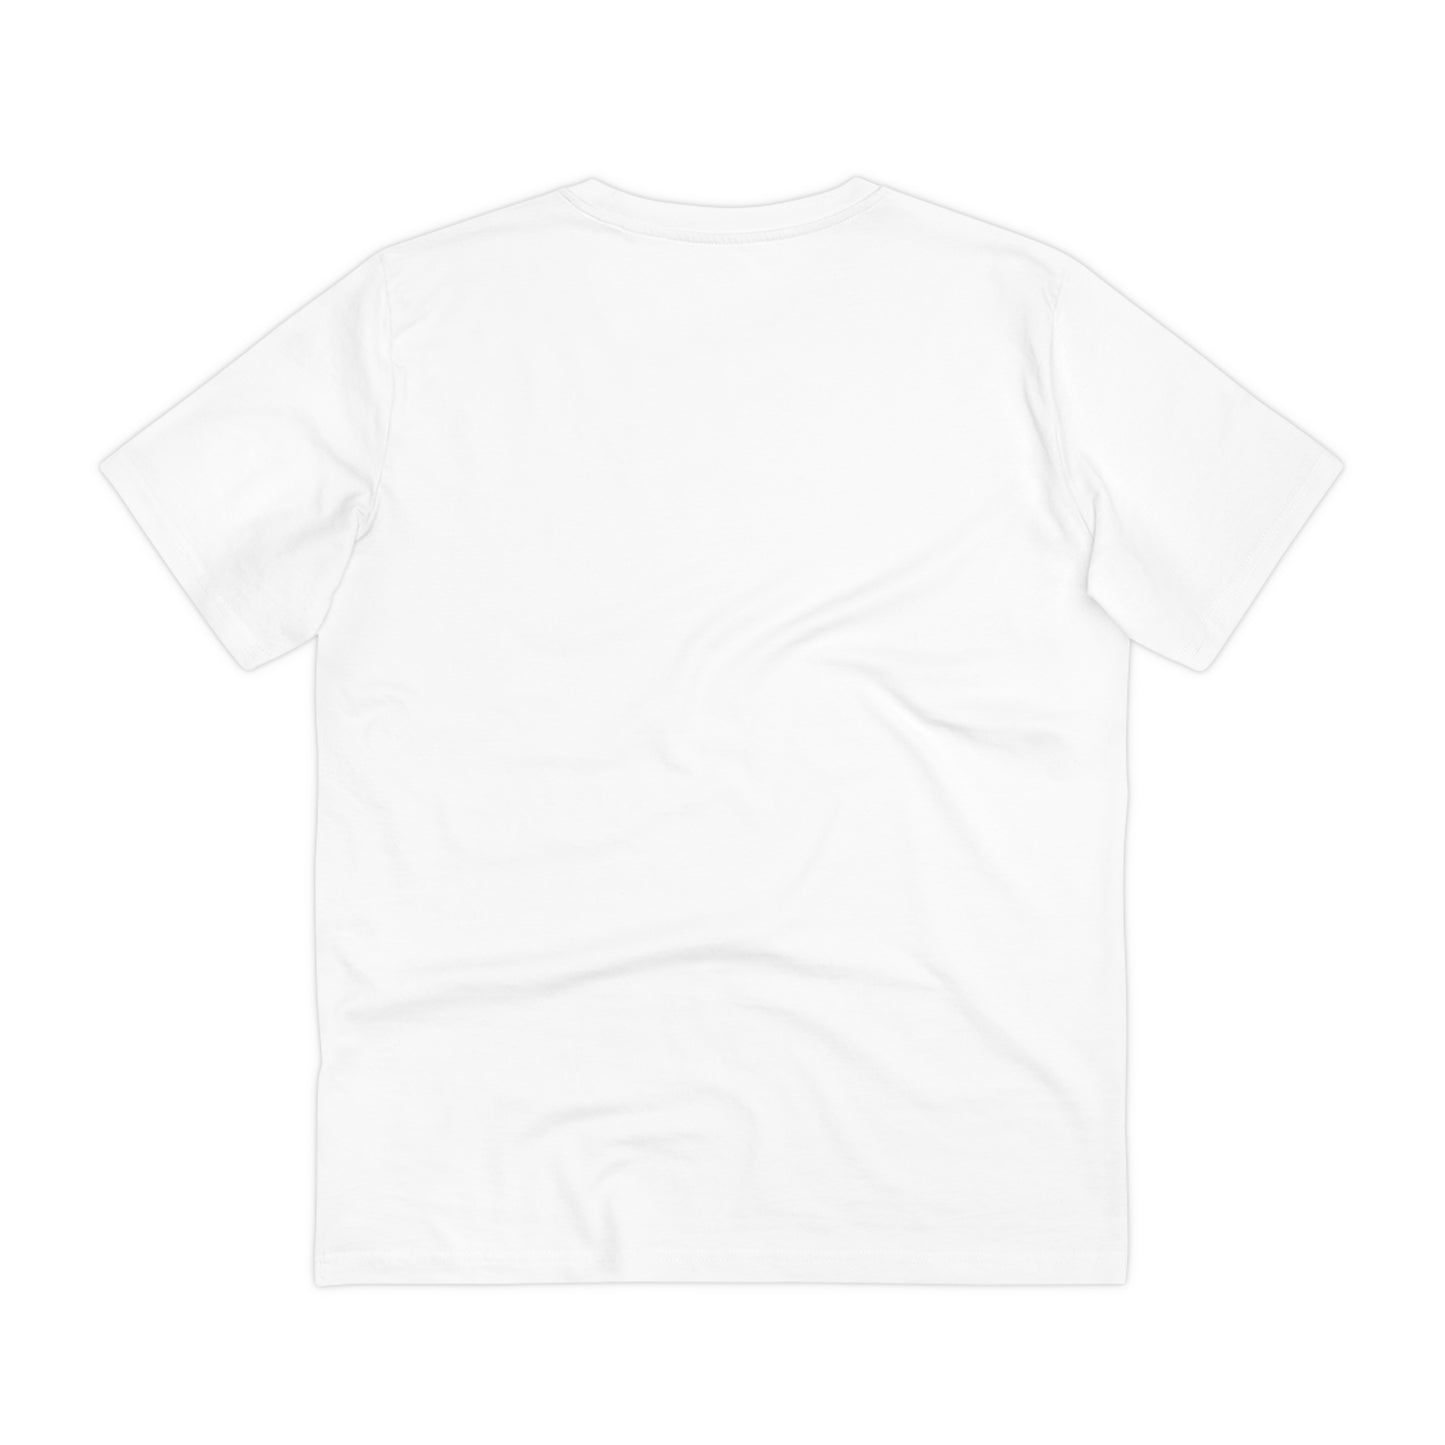 Justabarth T-Shirt #17